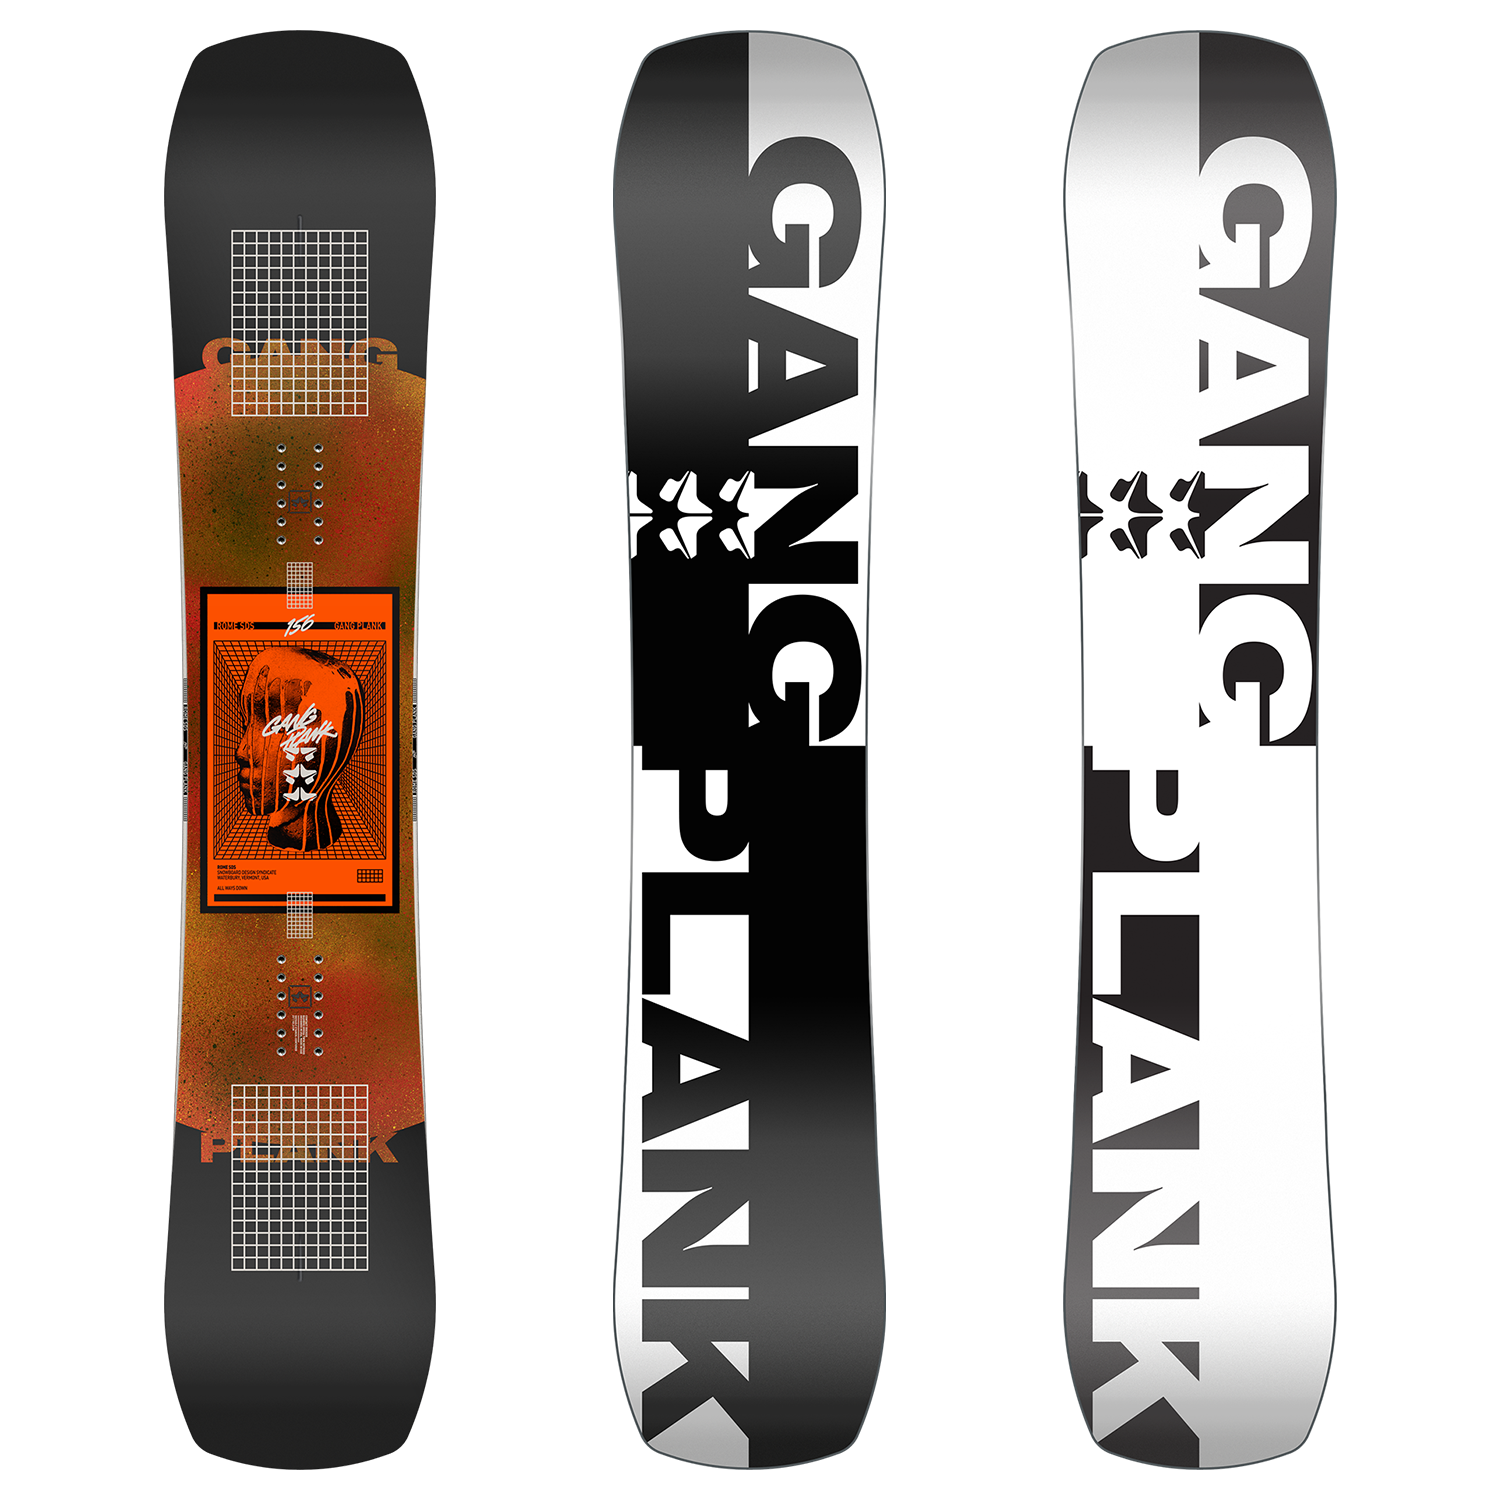 https://images.evo.com/imgp/zoom/209216/836656/rome-gang-plank-snowboard-2022-.jpg